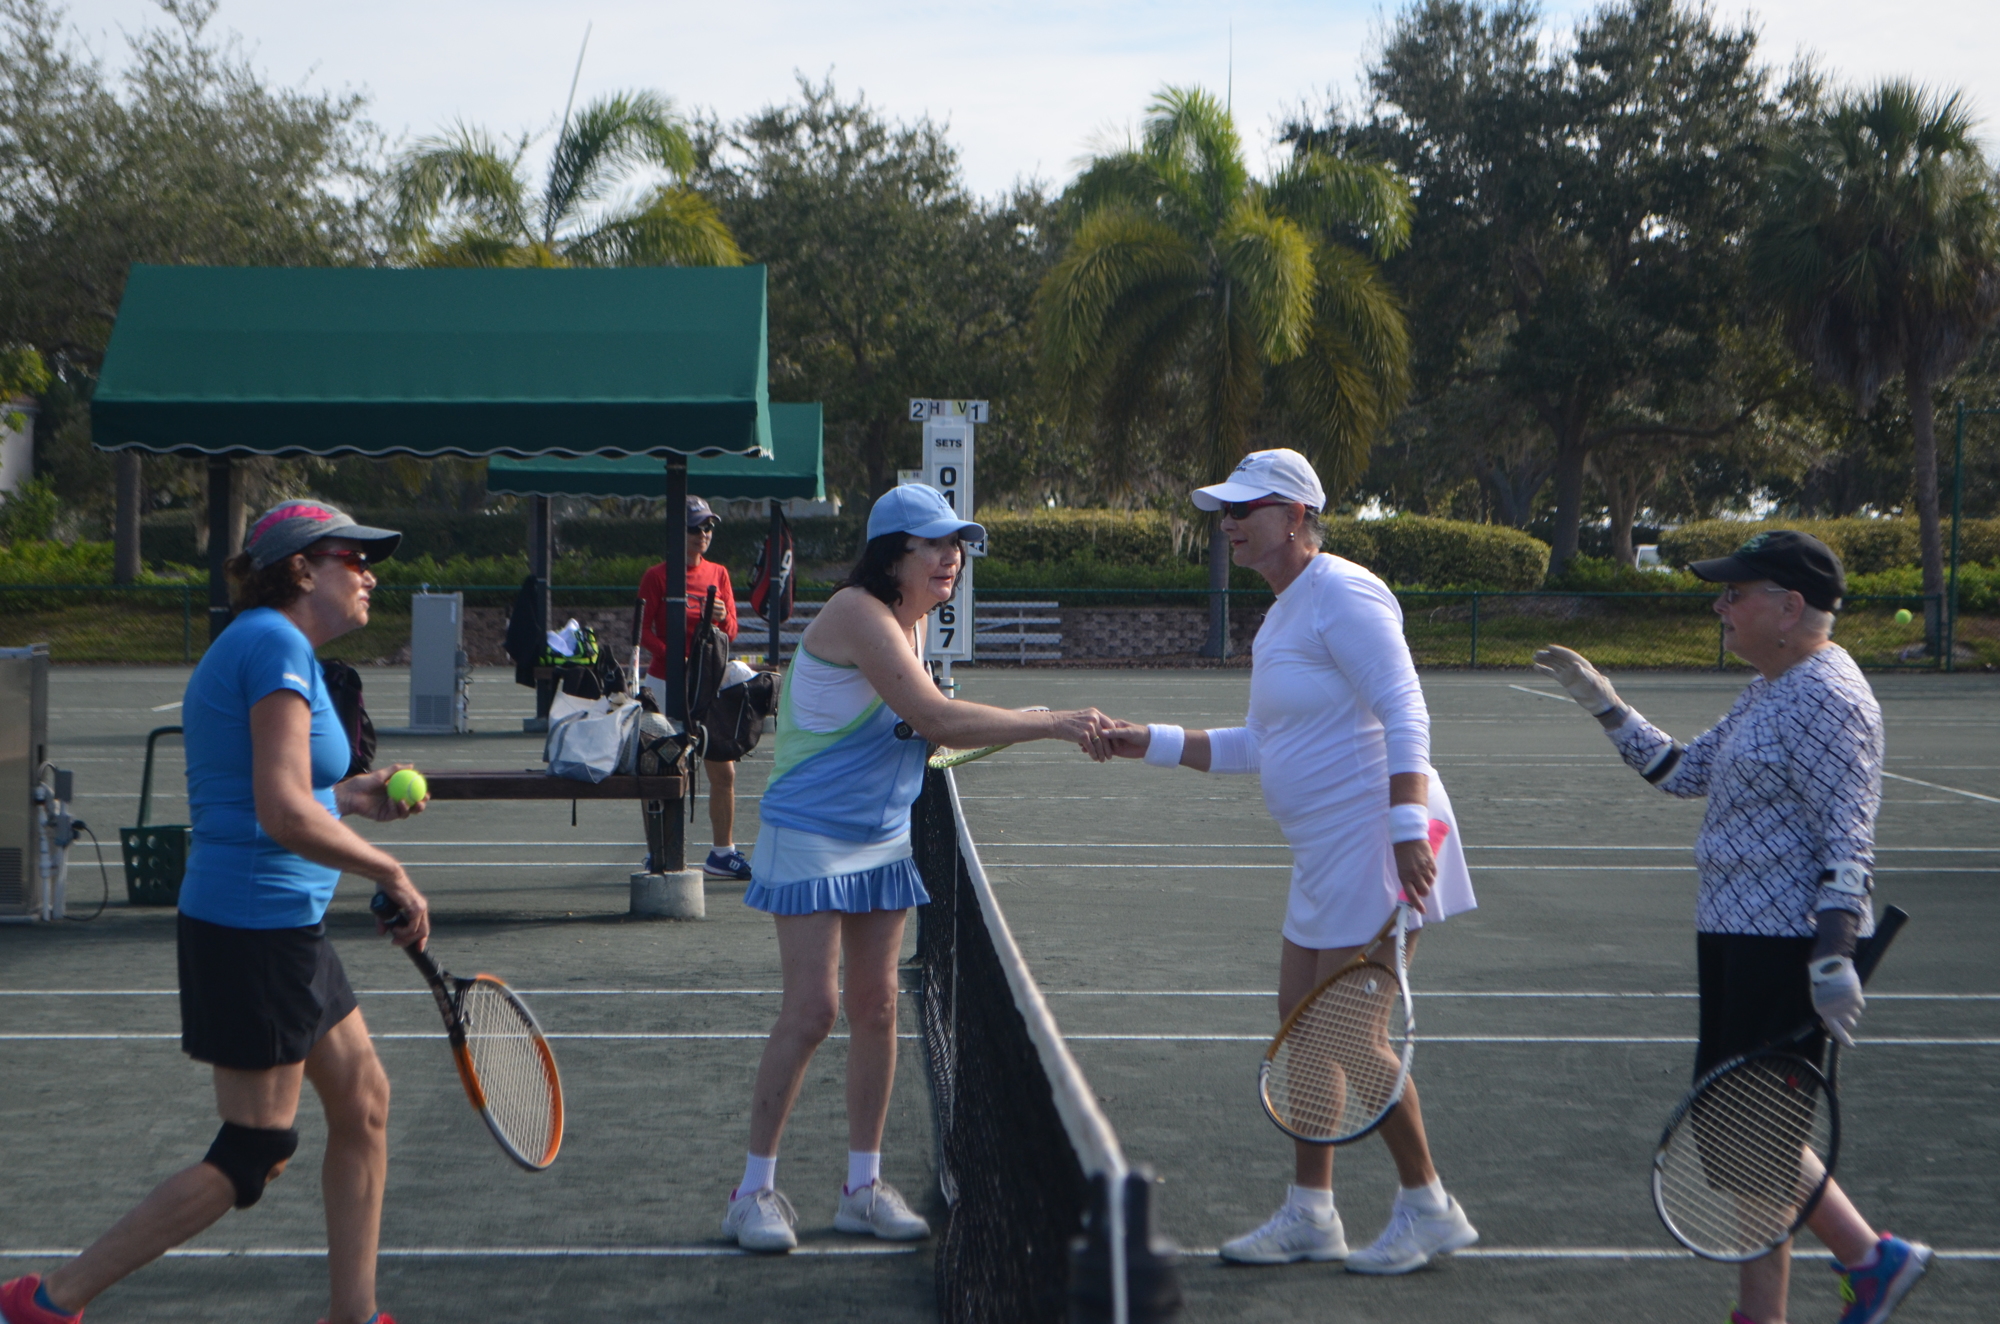 Karen Gary, Gisele  Virgien, Jean Gramaglia, Sally Steele go to shake hands after a tennis match. 